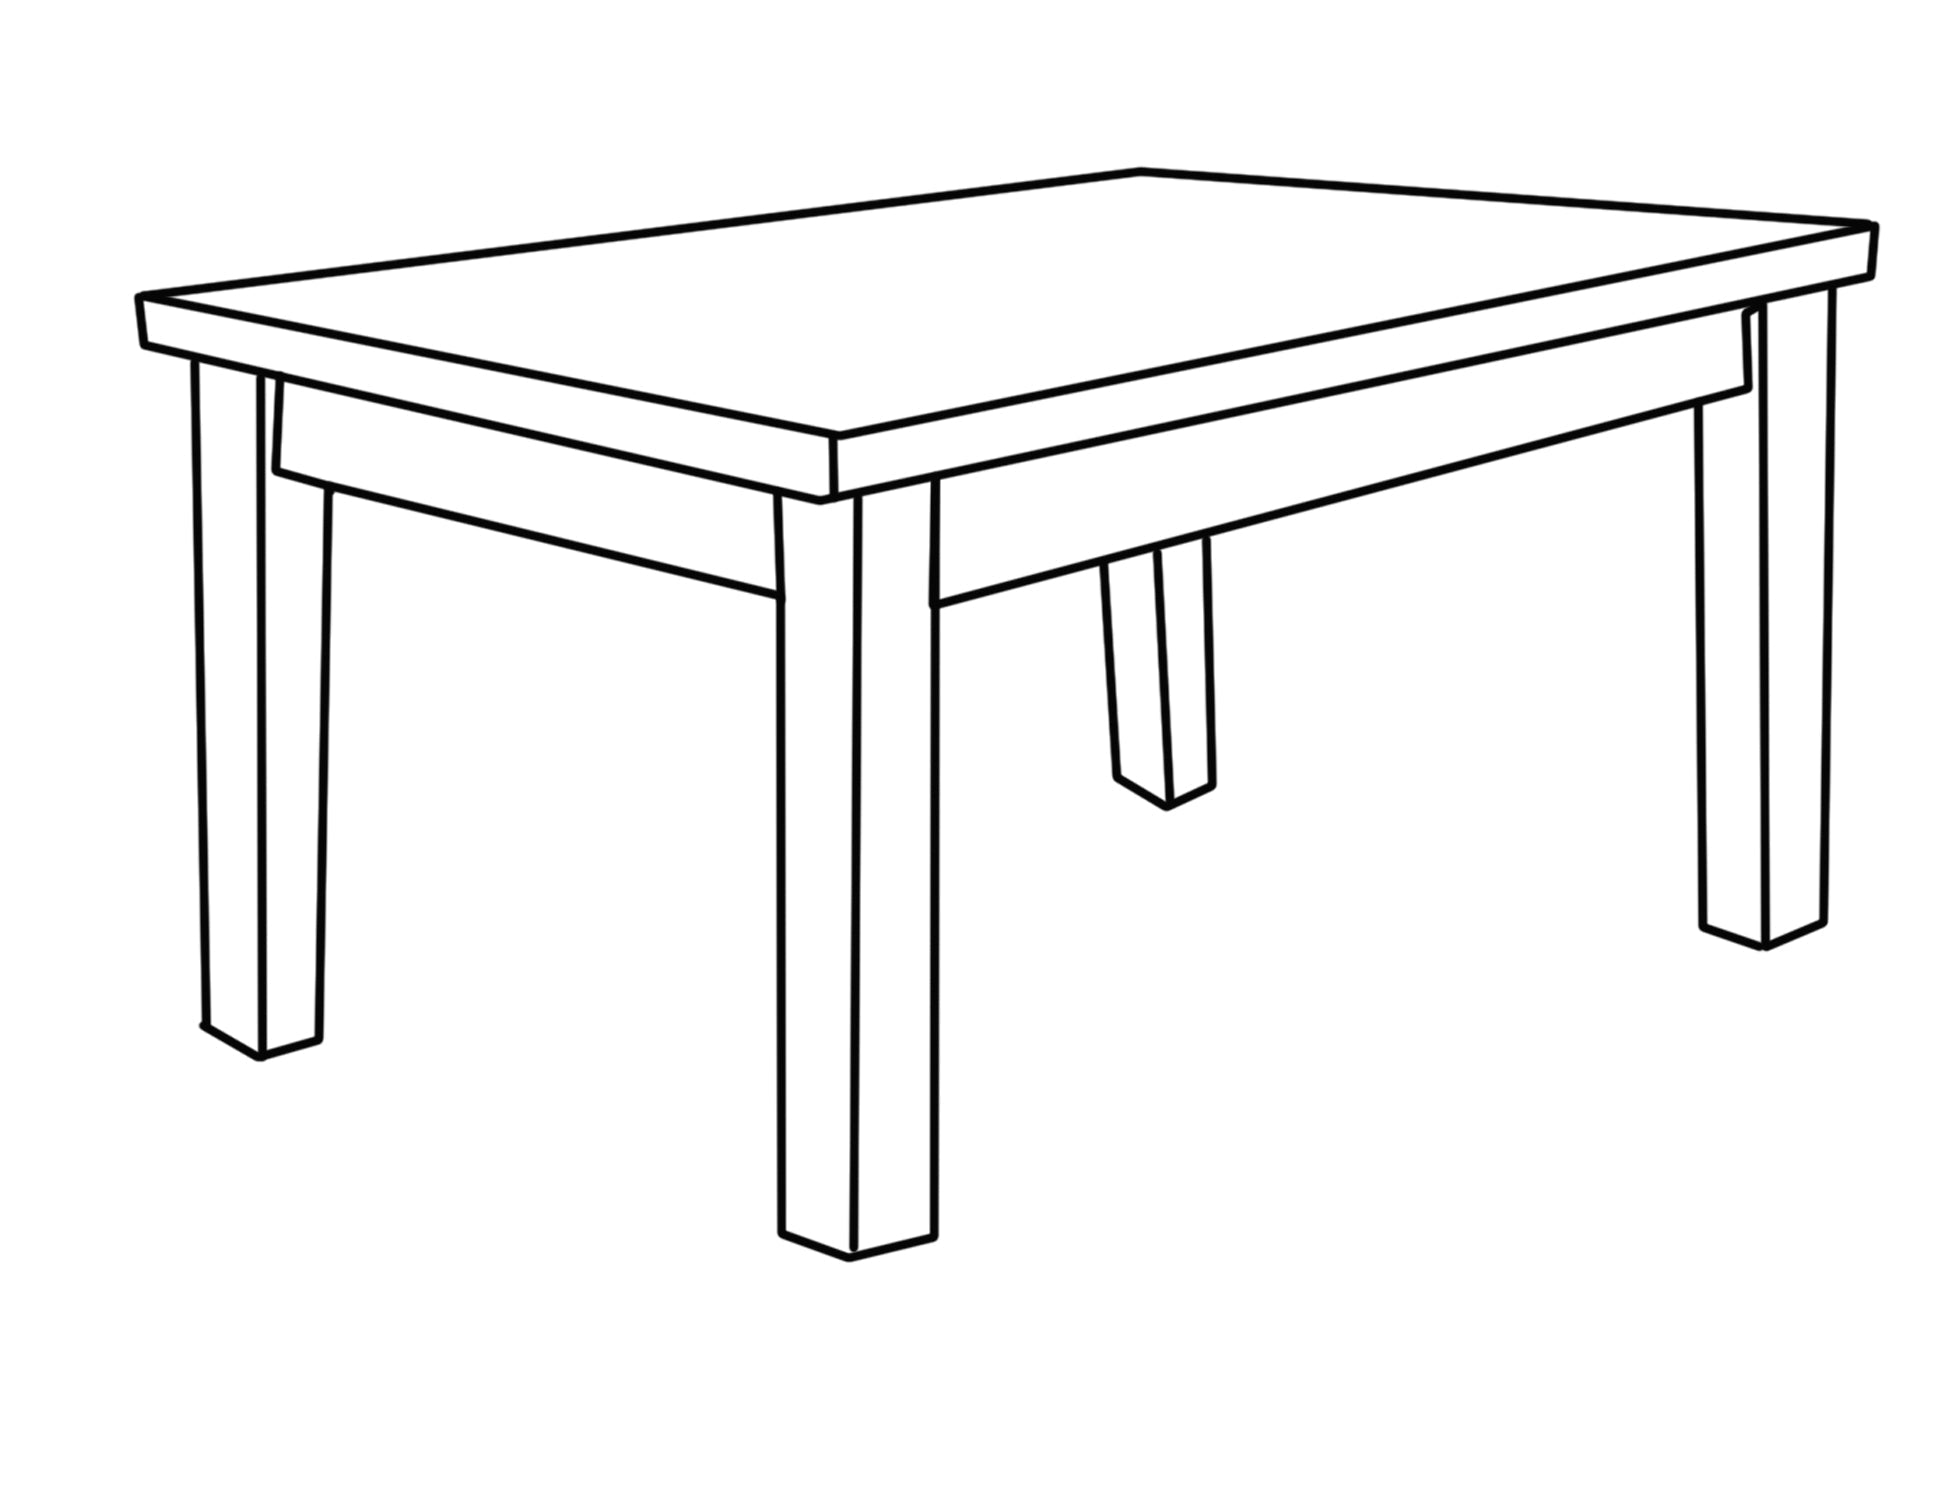 Oval Table Illustration